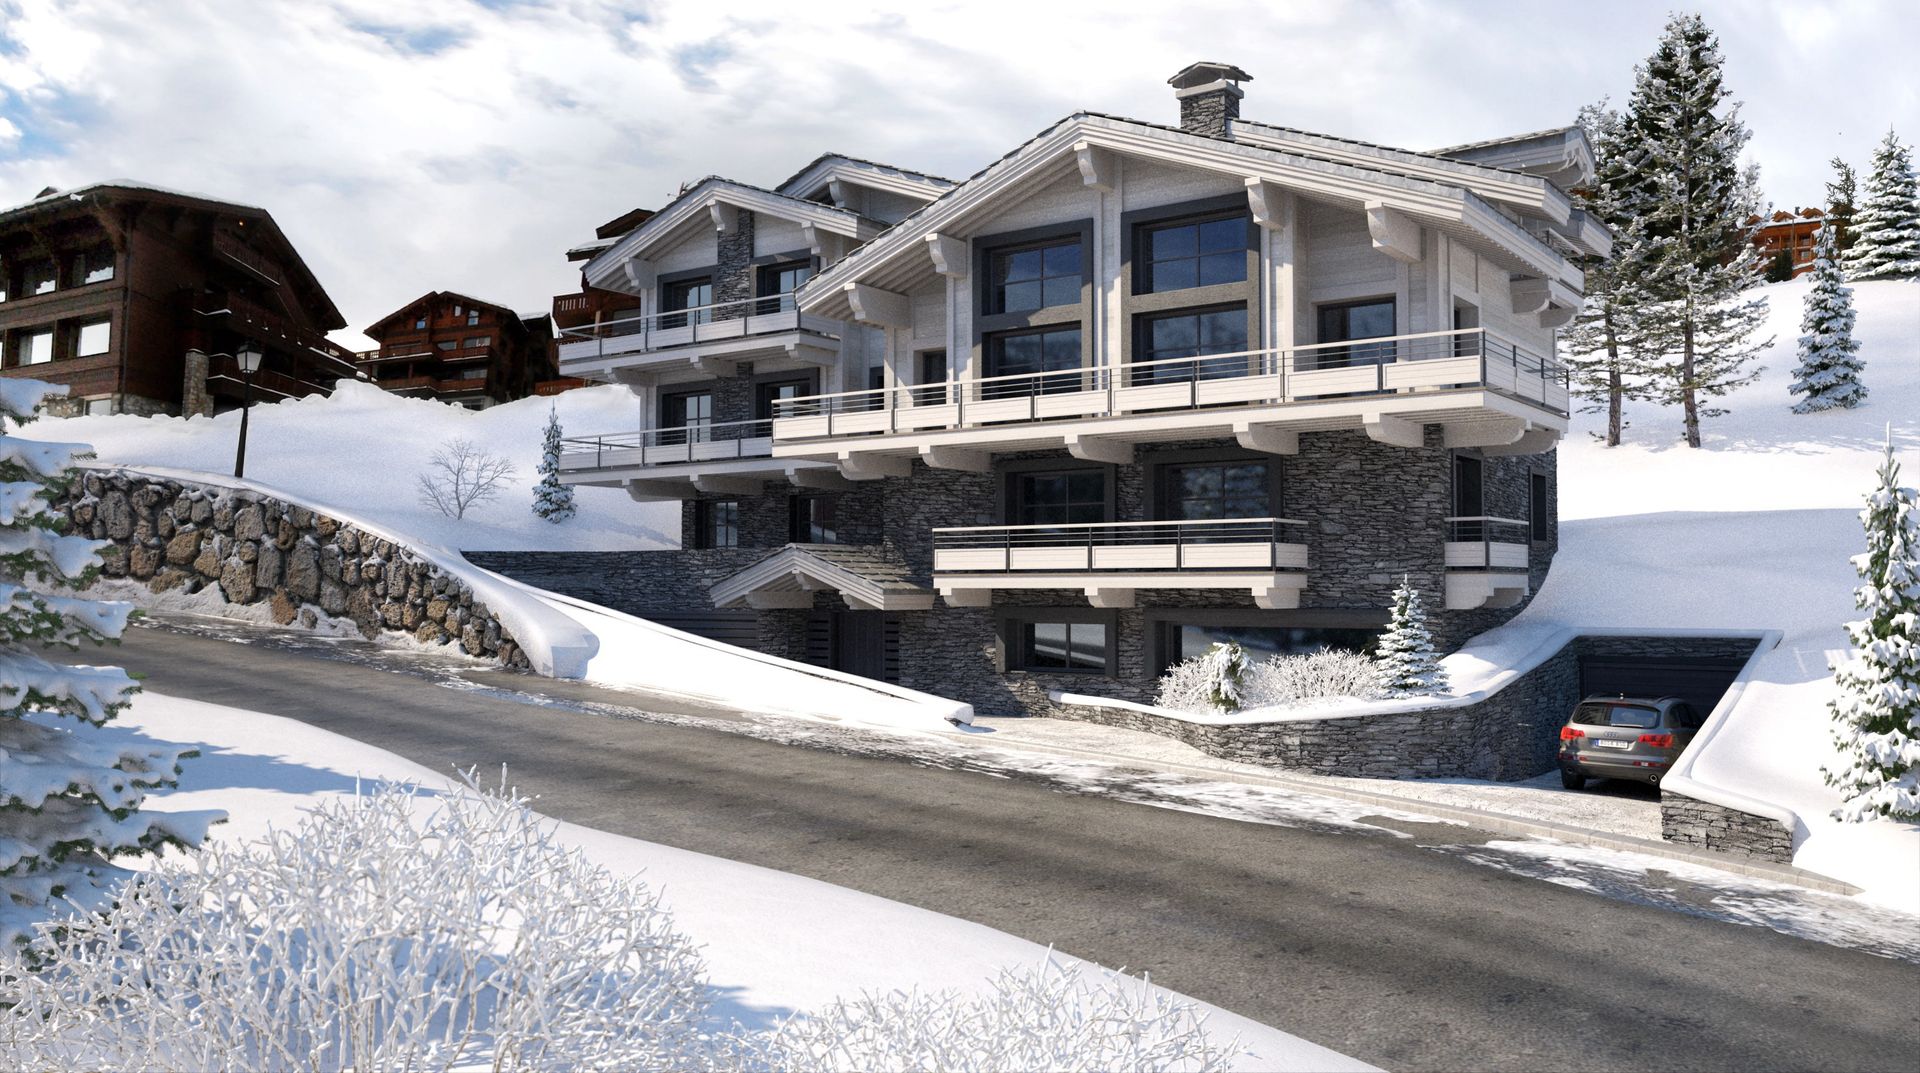 Perspectiva 3D - Chalet en la nieve Realistic-design Casas de madera